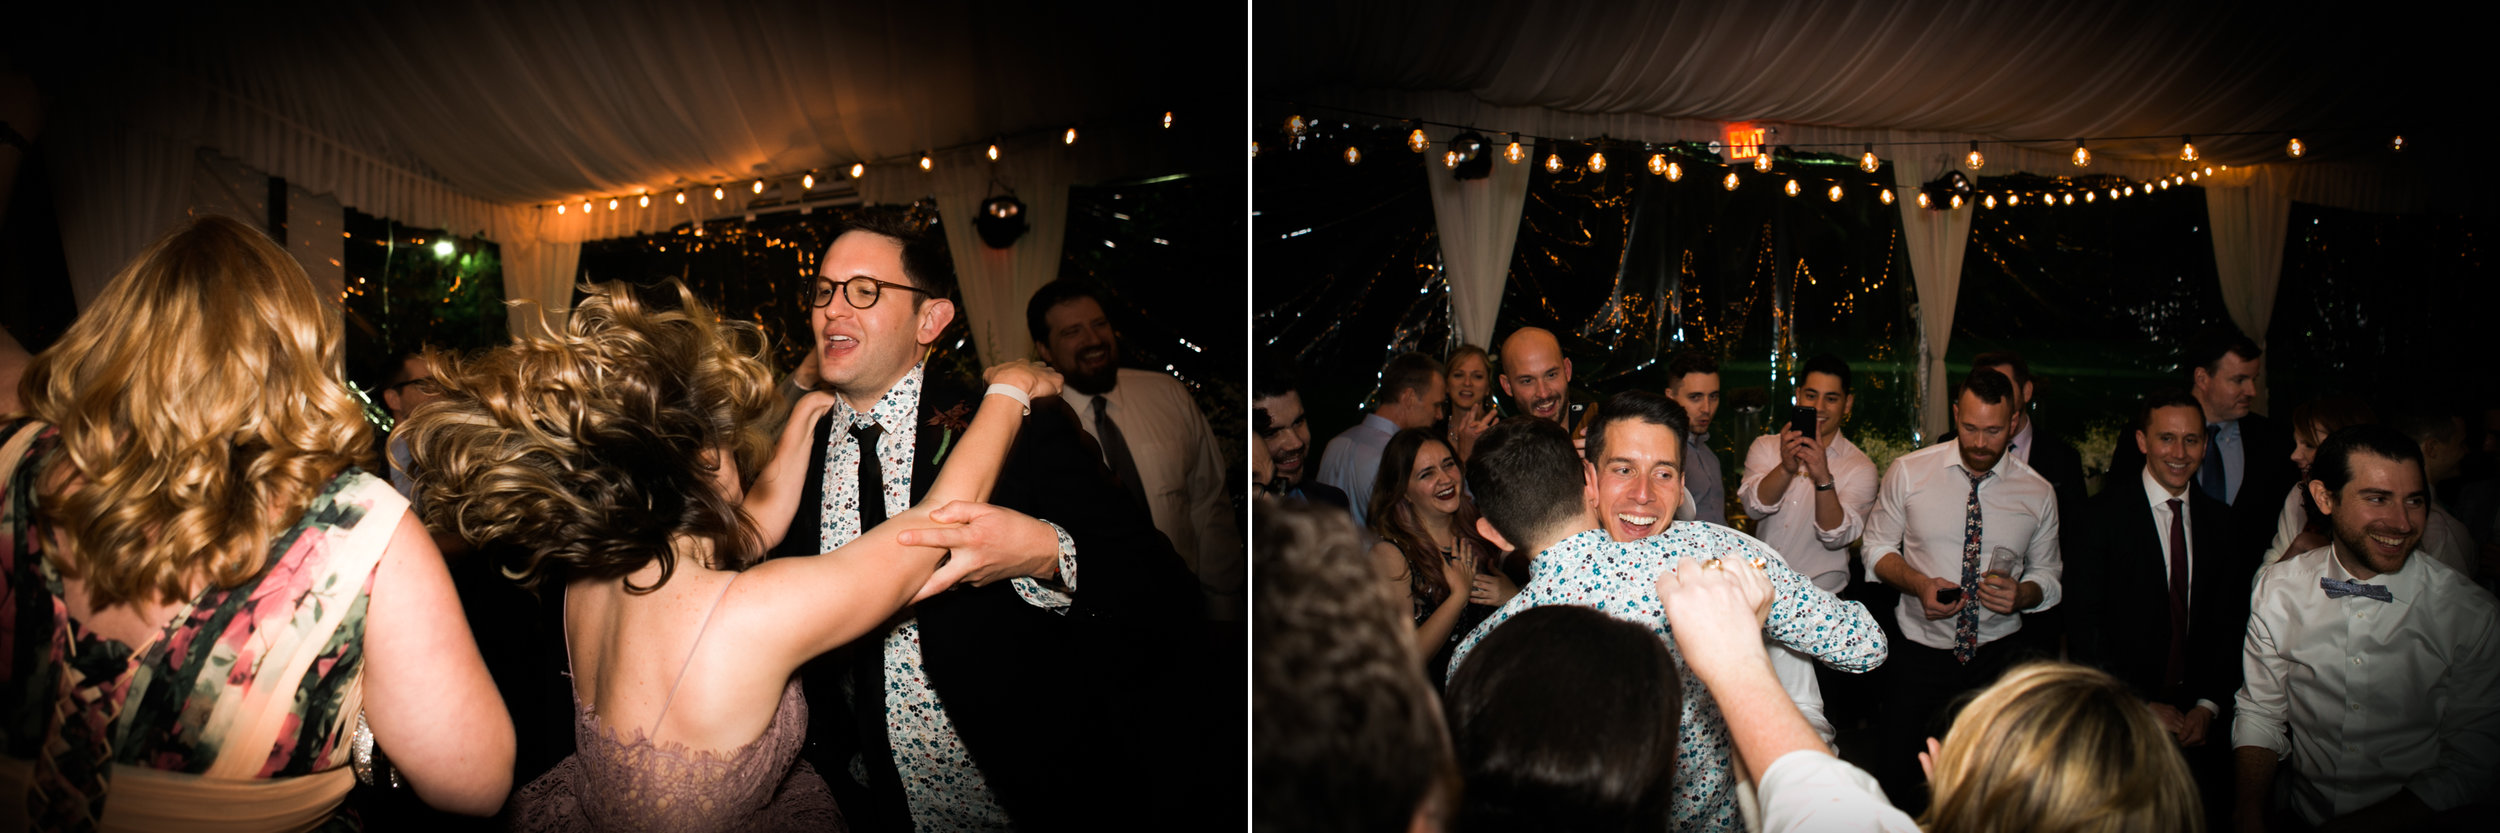 Gay Wedding Party Photography.jpg